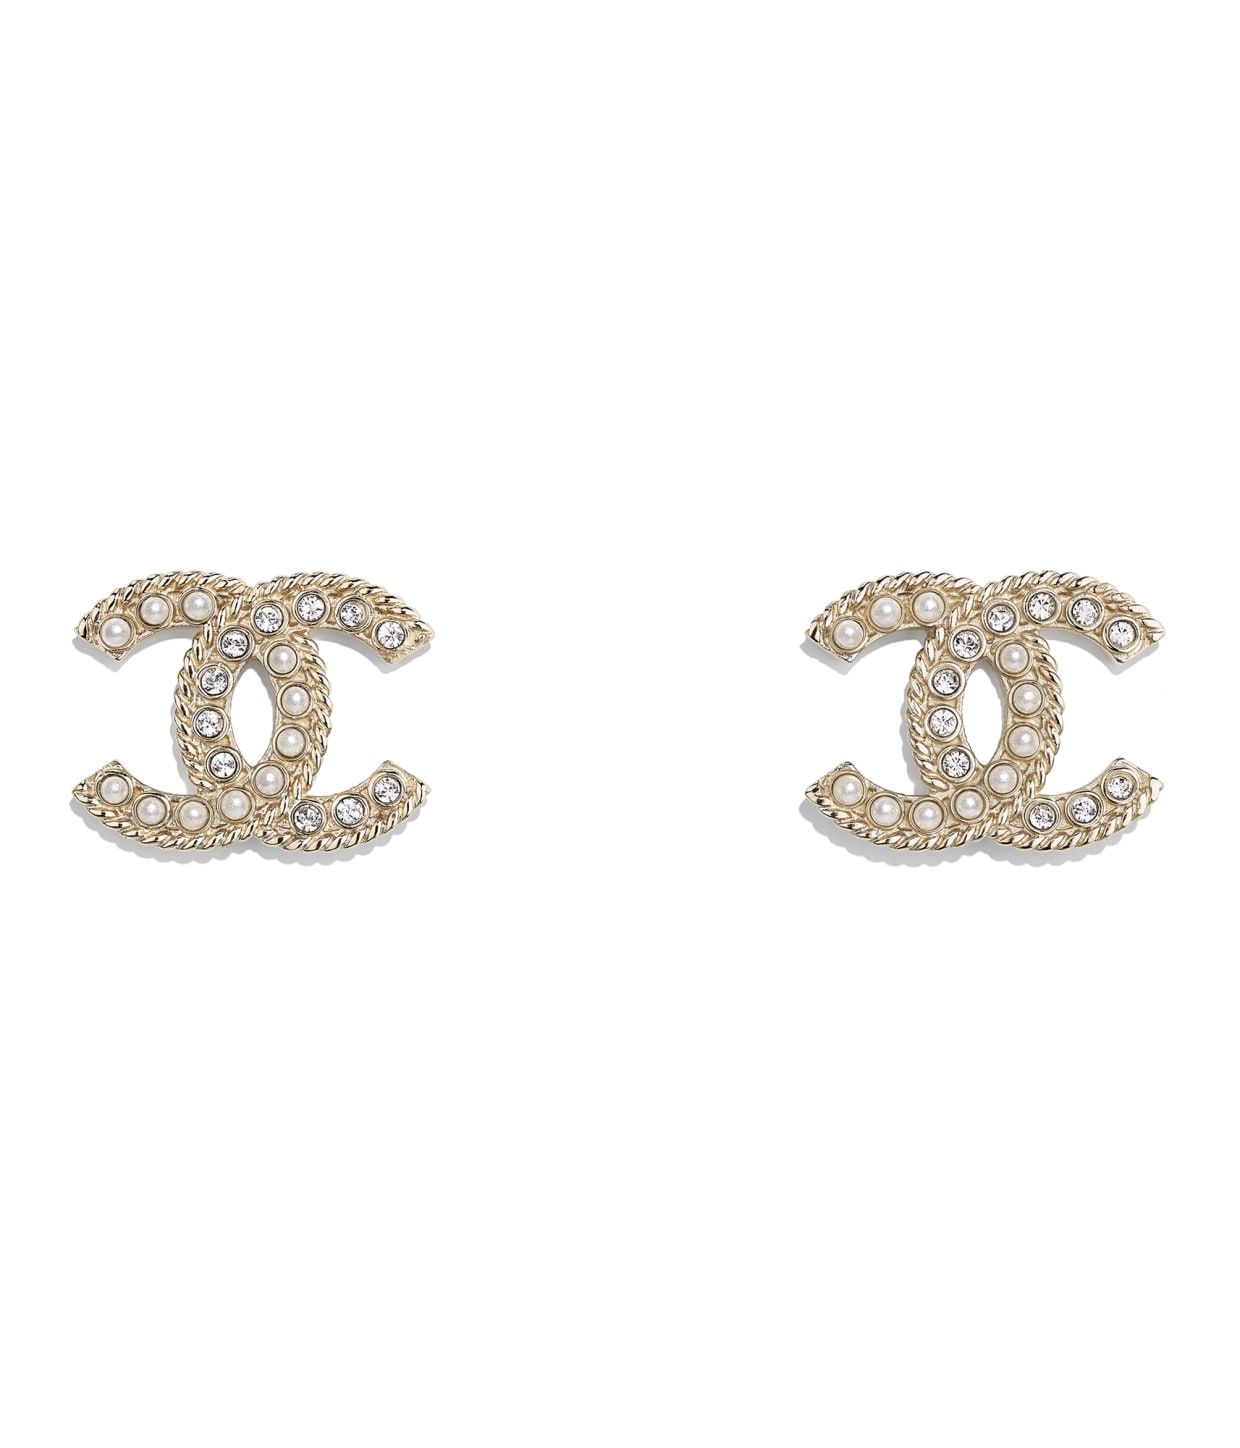 Metal, Glass Pearls & Strass | Chanel, Inc. (US)